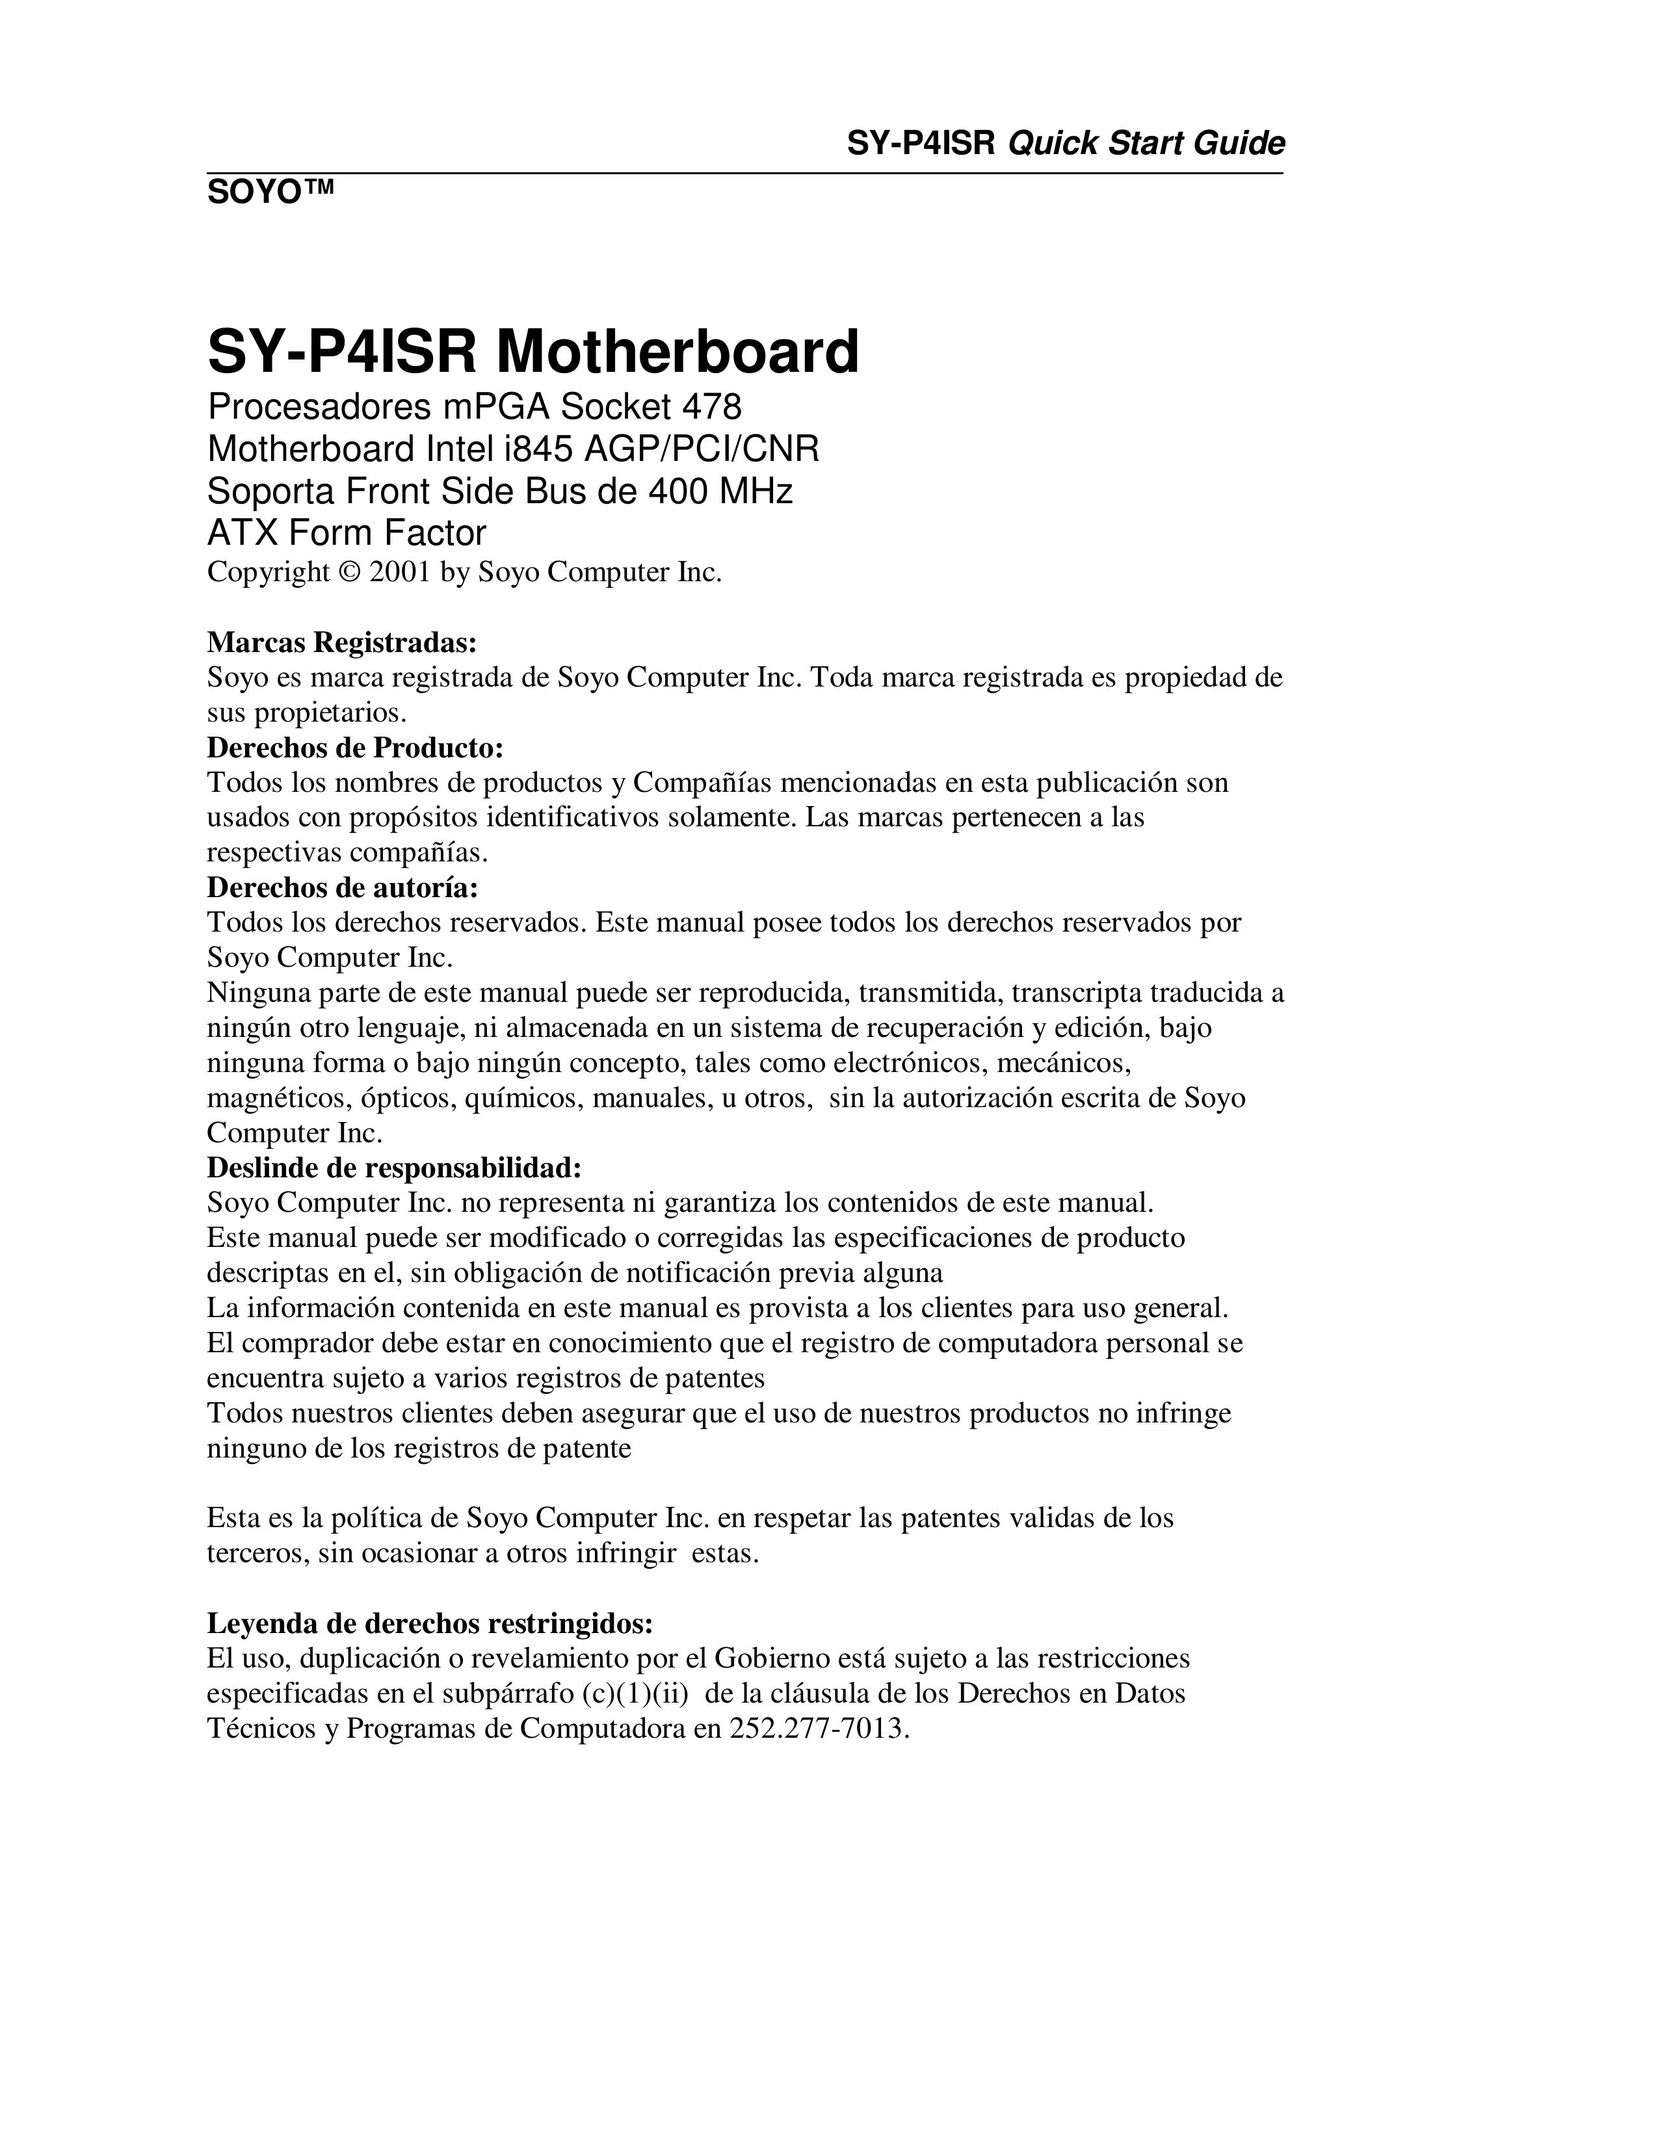 SOYO SOYO Motherboard Computer Hardware User Manual